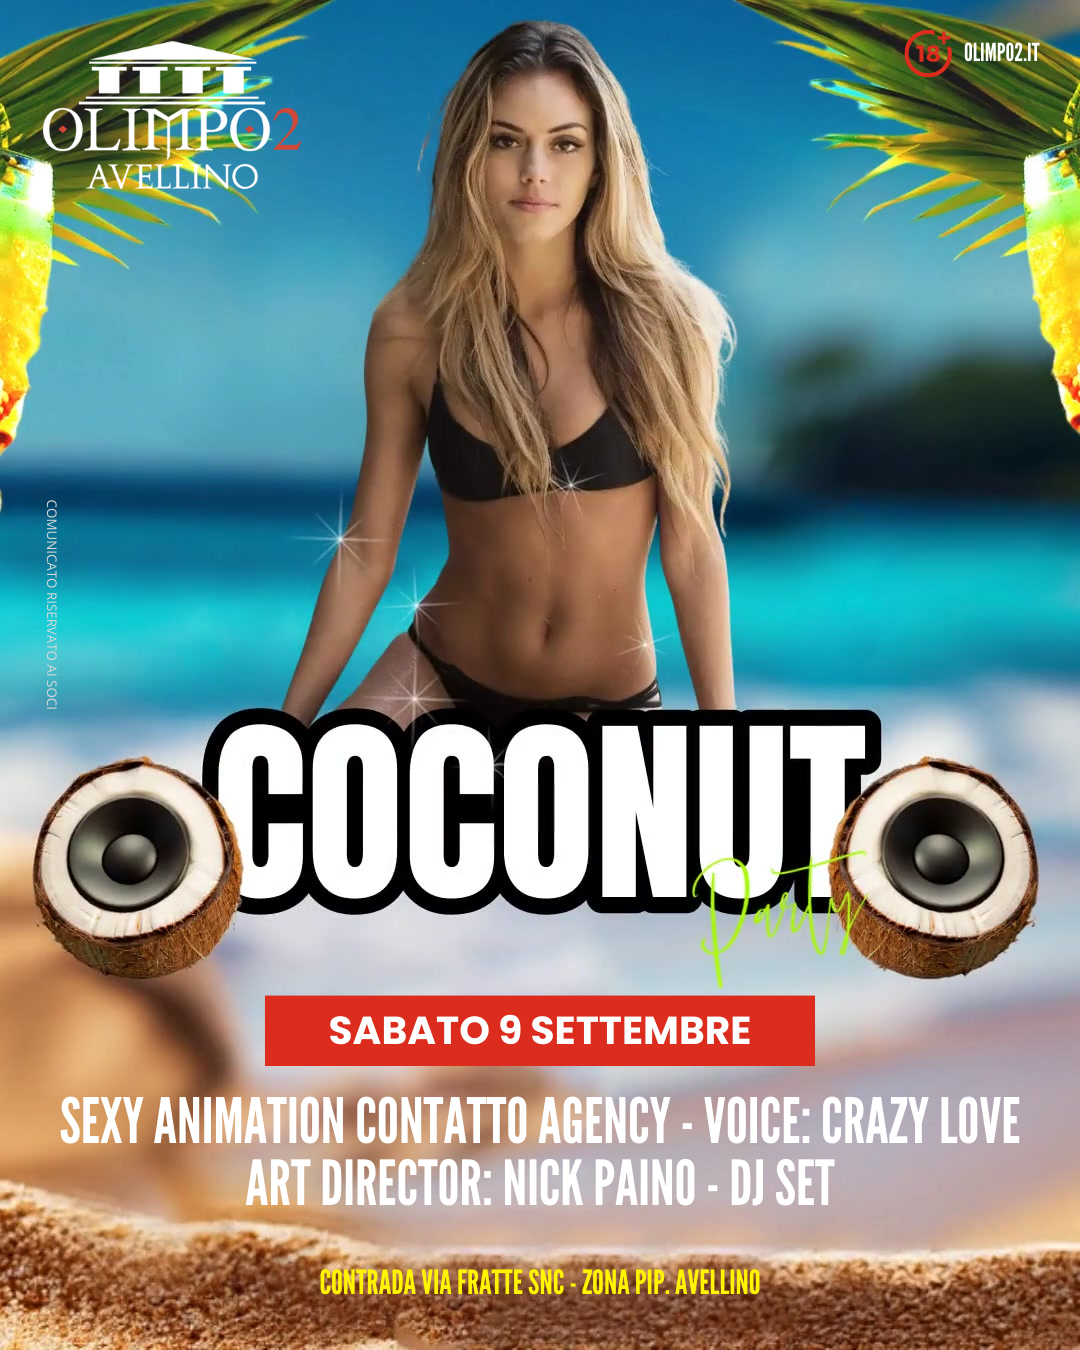 coconut party olimpo 2 avellino